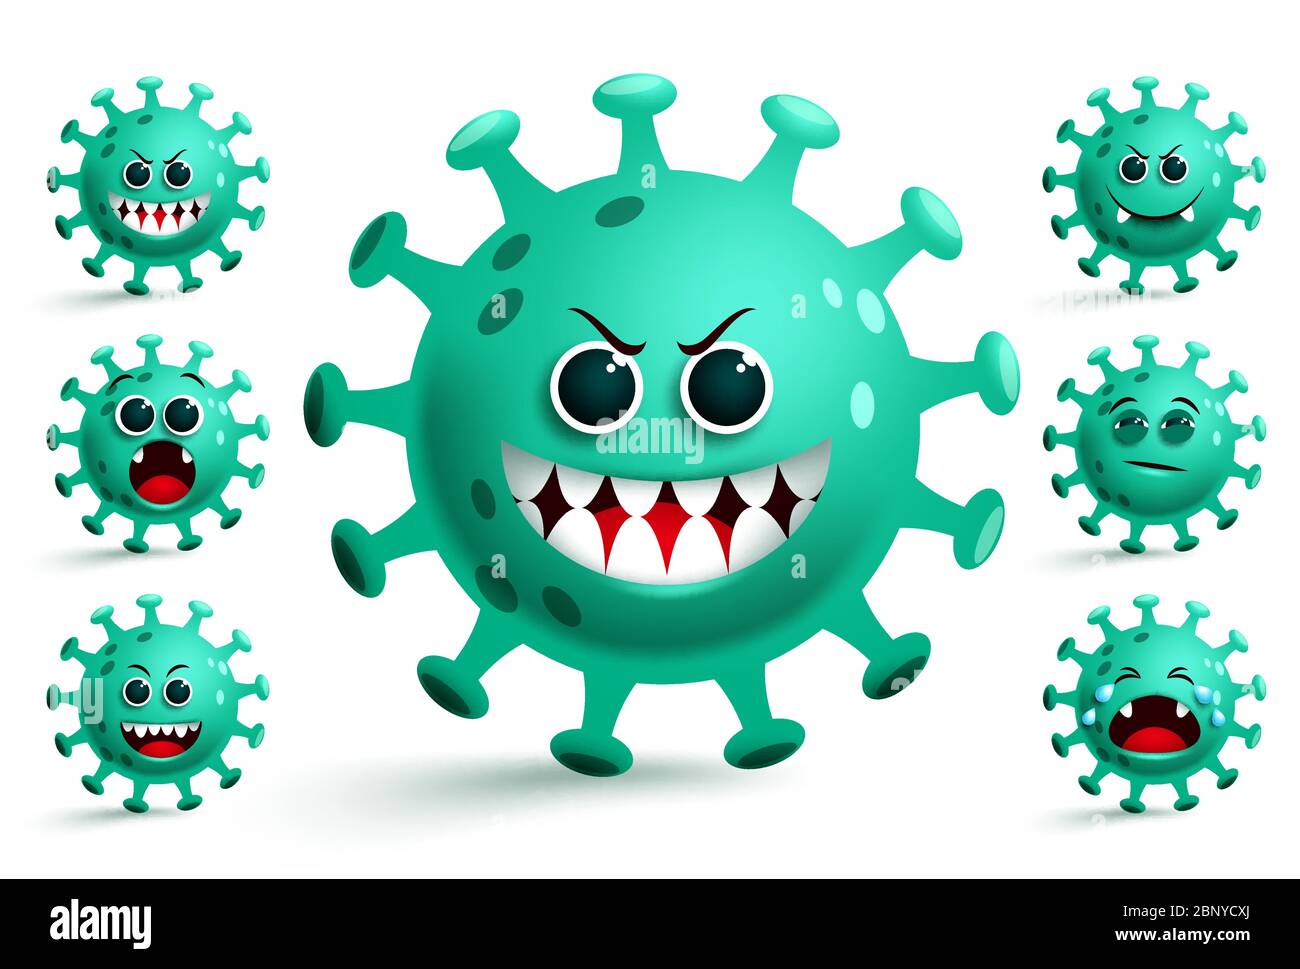 Corona virus emojis vector set. Green covid-19 coronavirus smiley emojis  and emoticons with scary facial expression for pandemic carton collection  Stock Vector Image & Art - Alamy